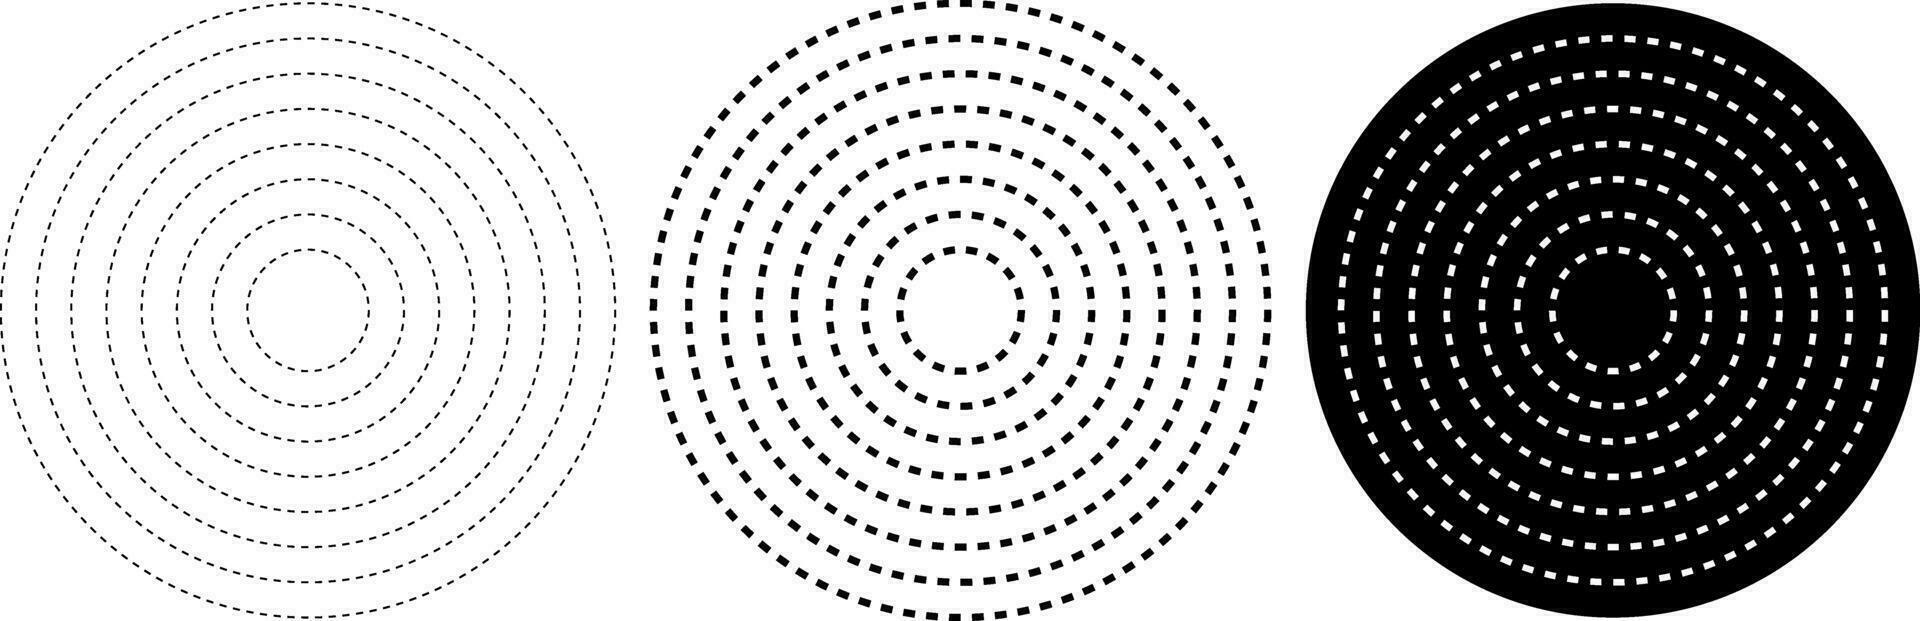 Halftone dash circle element. Radial, radiating dash lines. Circular, concentric circles vector